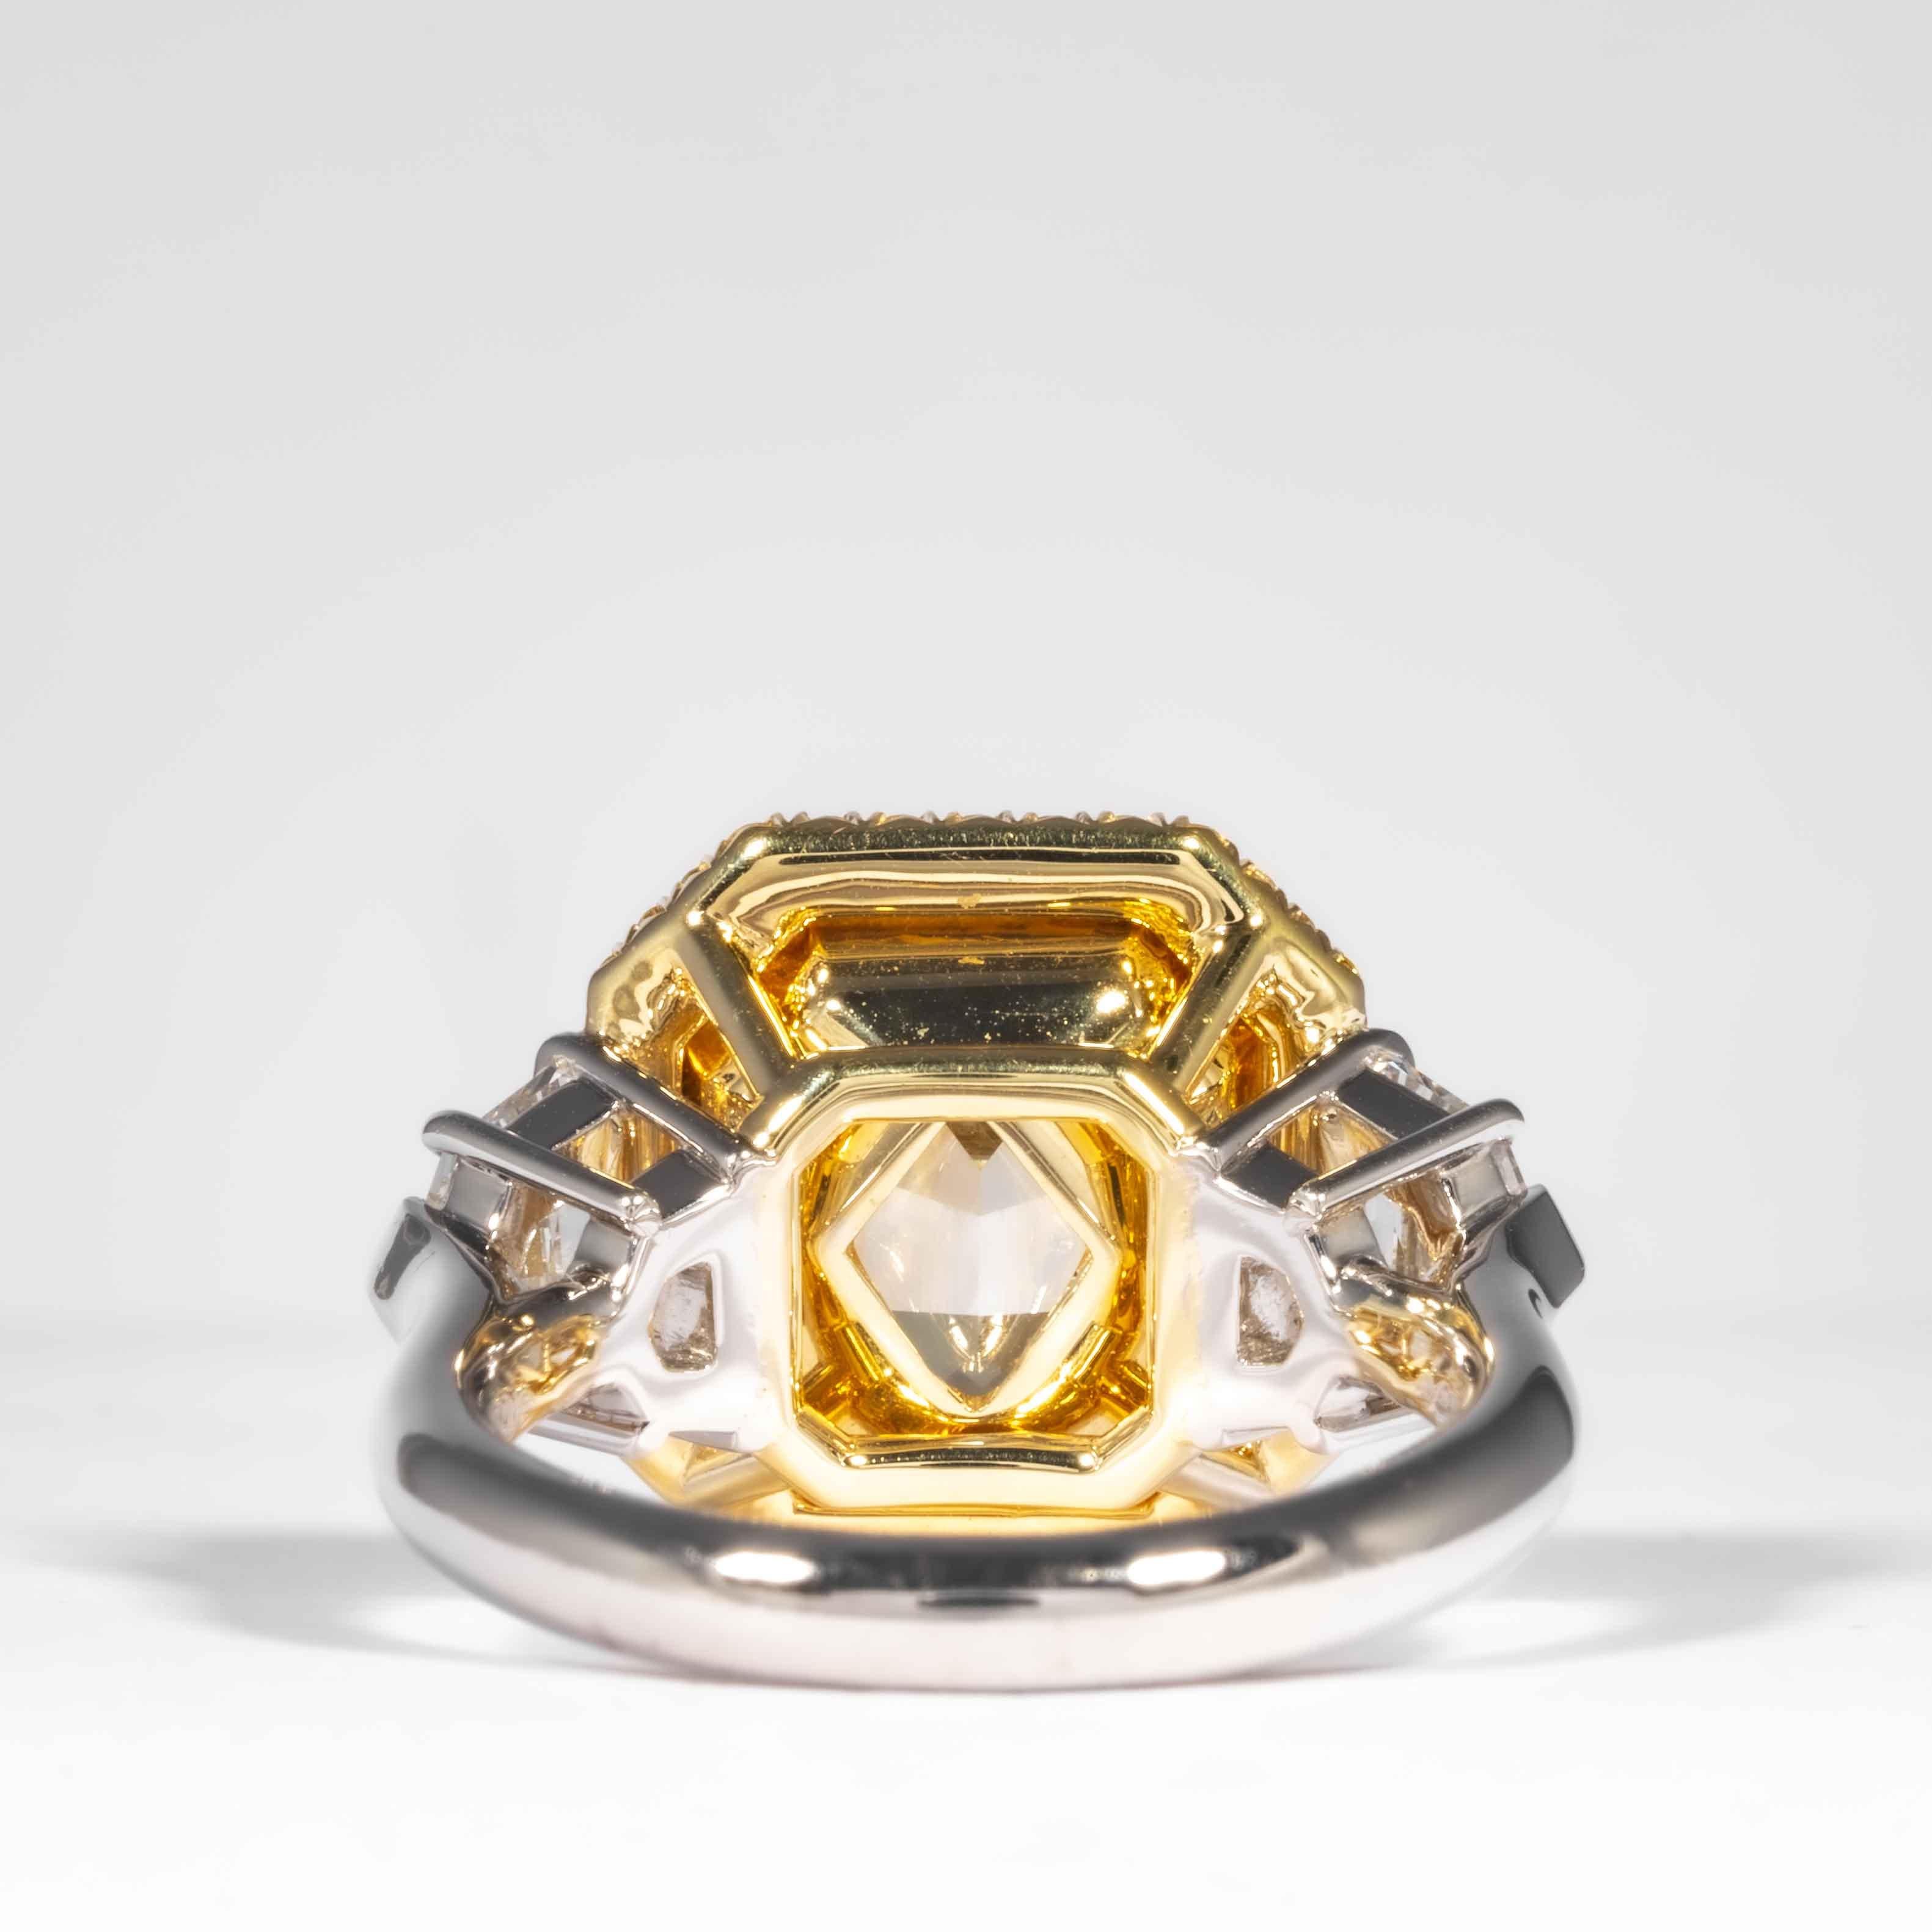 Shreve, Crump & Low GIA Certified 8.02 Carat Fancy Yellow Asscher Diamond Ring For Sale 1